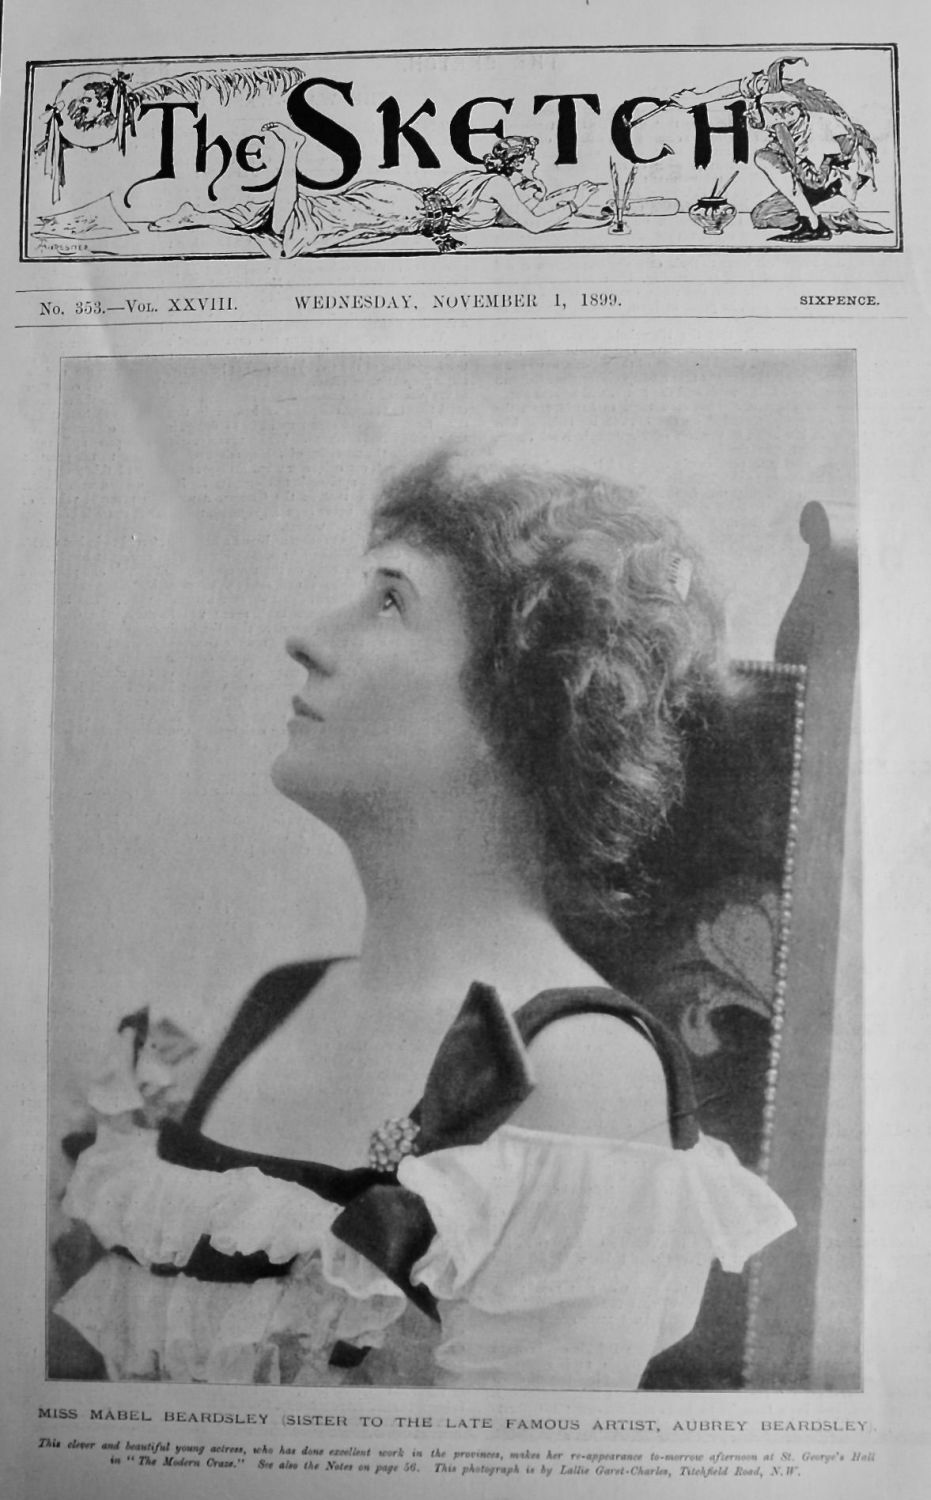 Miss Mabel Beardsley (Sister to the Late Famous Artist, Aubrey Beardsley). 